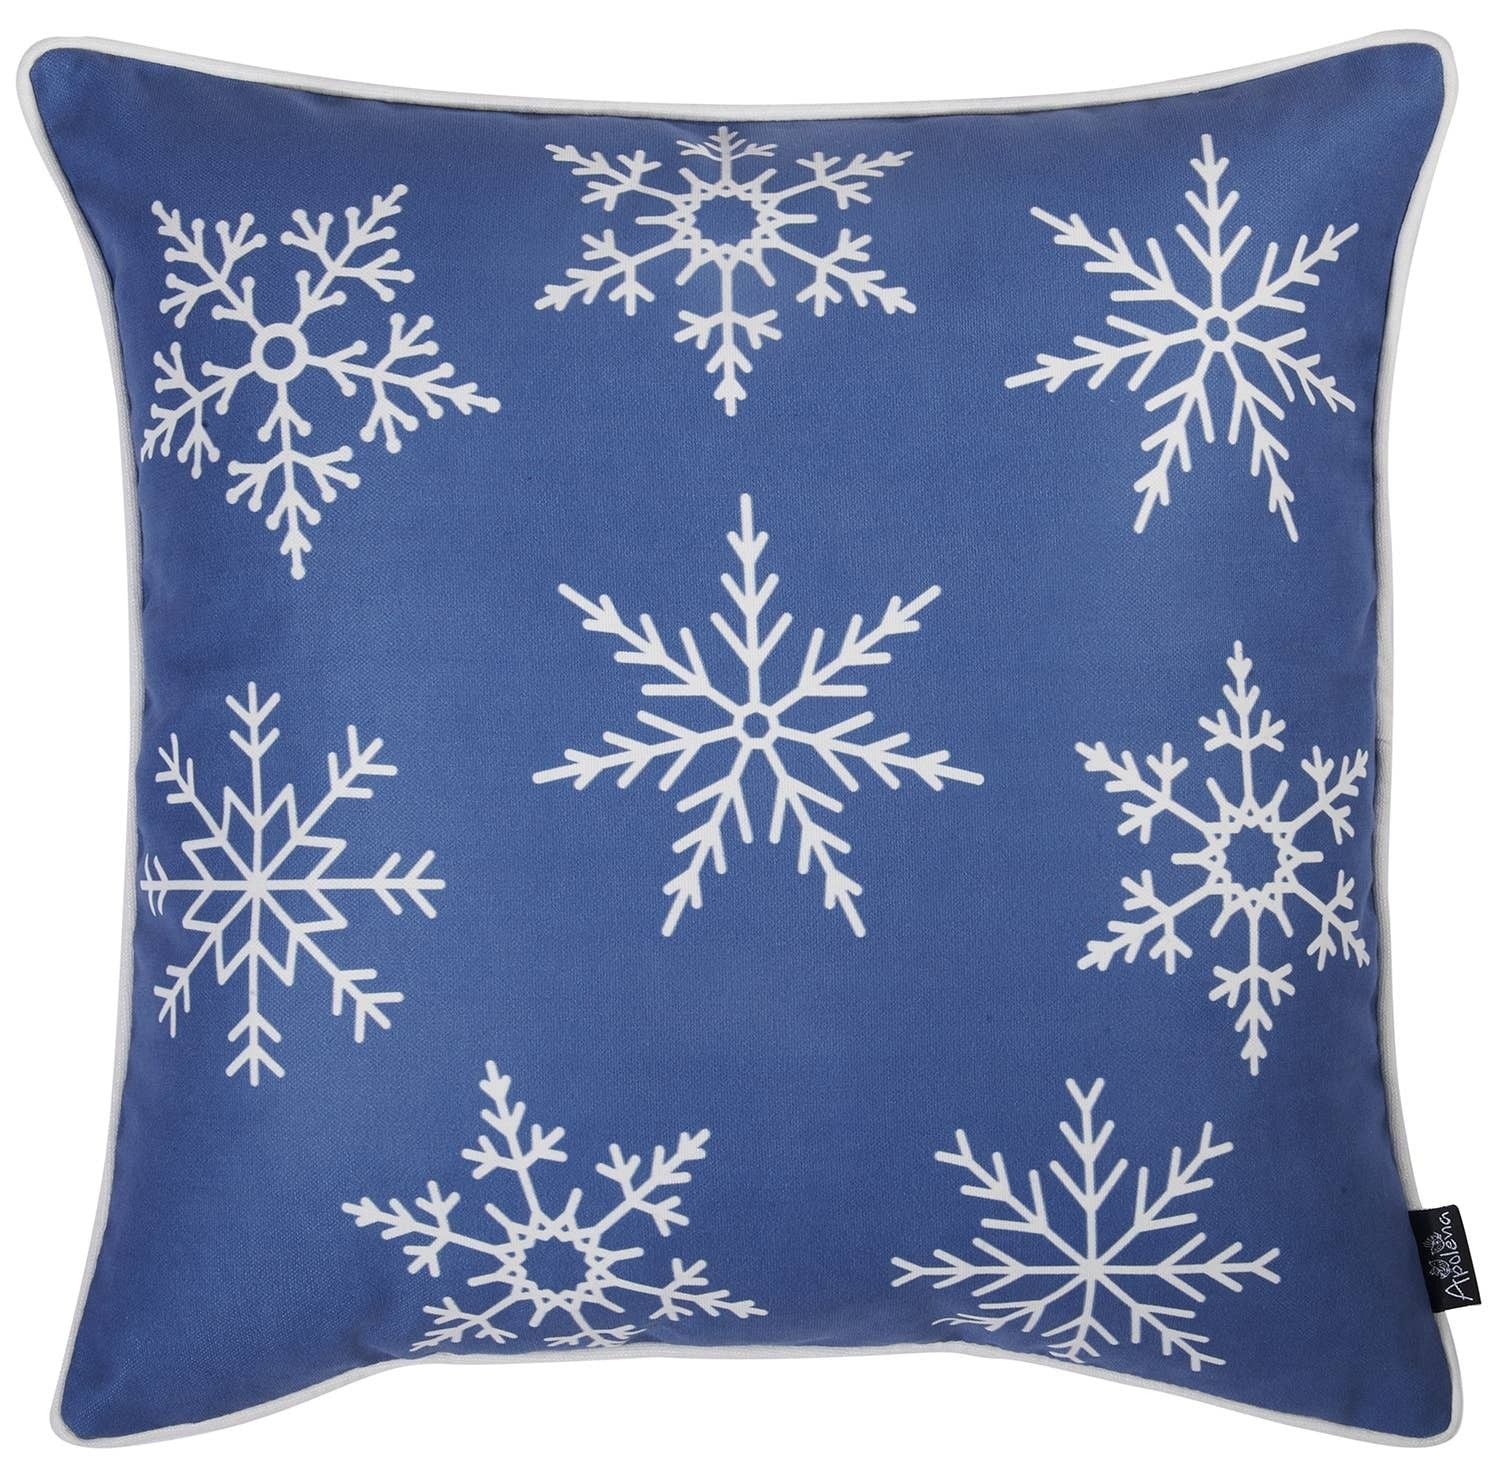 18"Lx18"D Zippered Polyester Christmas Reindeer Throw Pillow Cover (Set of 4) - Blue